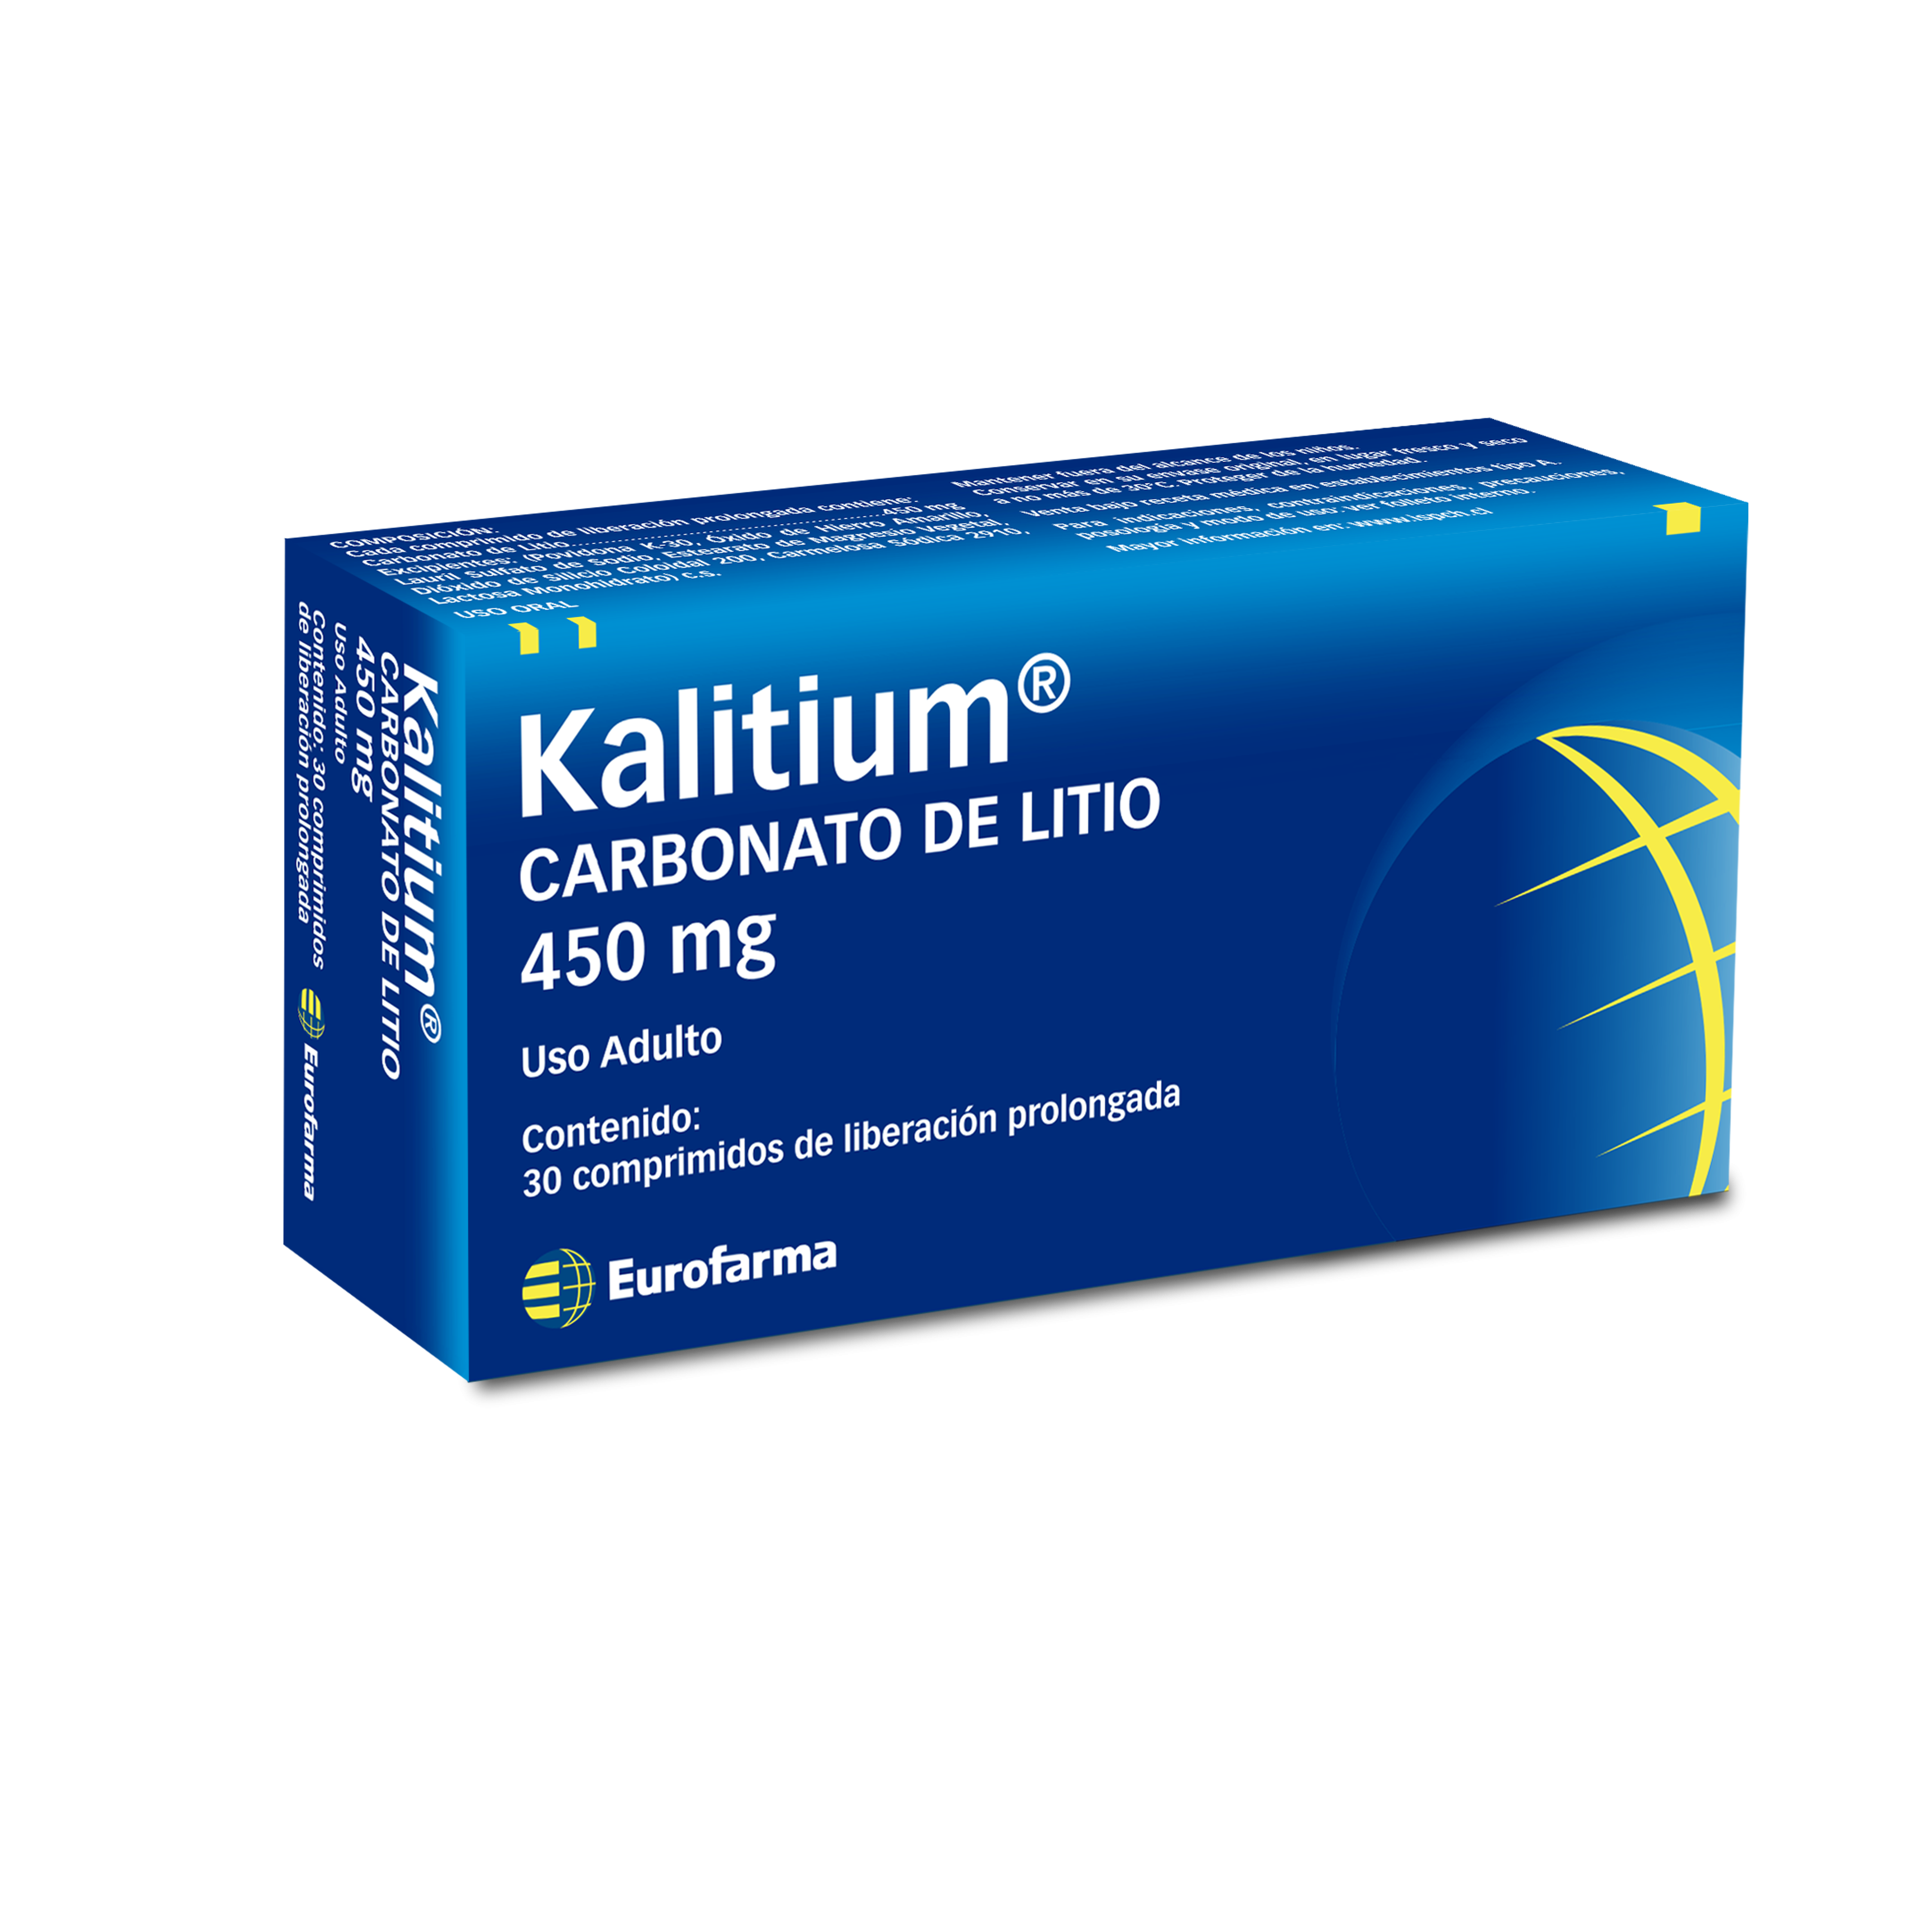 Kalitium 450 mg. (Carbonato de Litio)